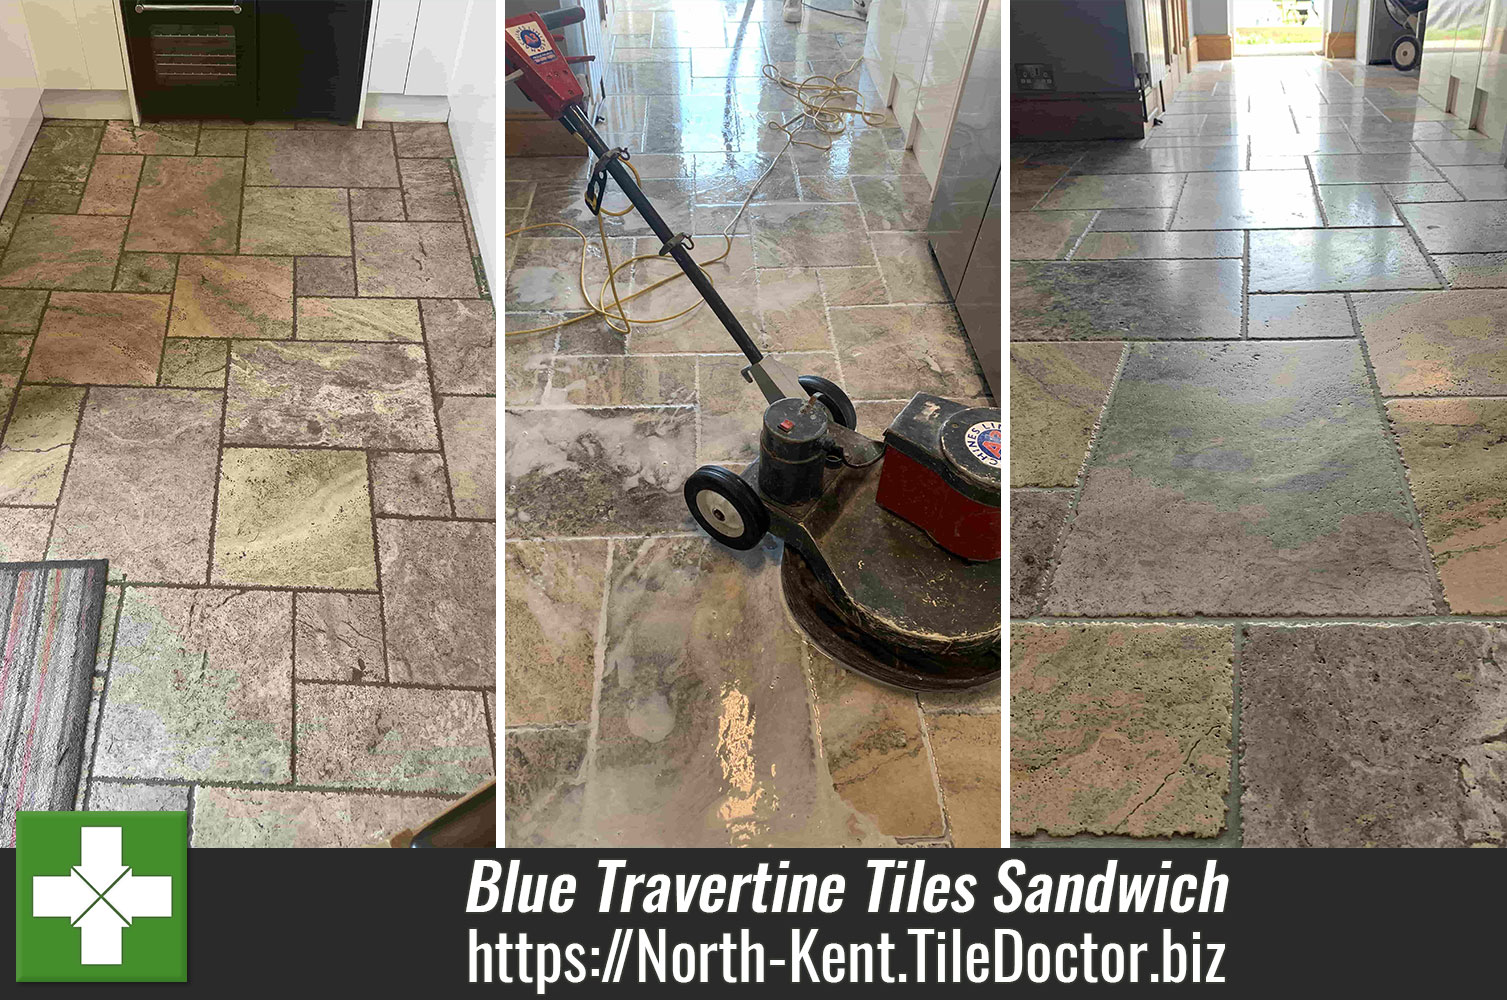 Blue Travertine Kitchen Floor Tiles Renovated in Sandwich Kent